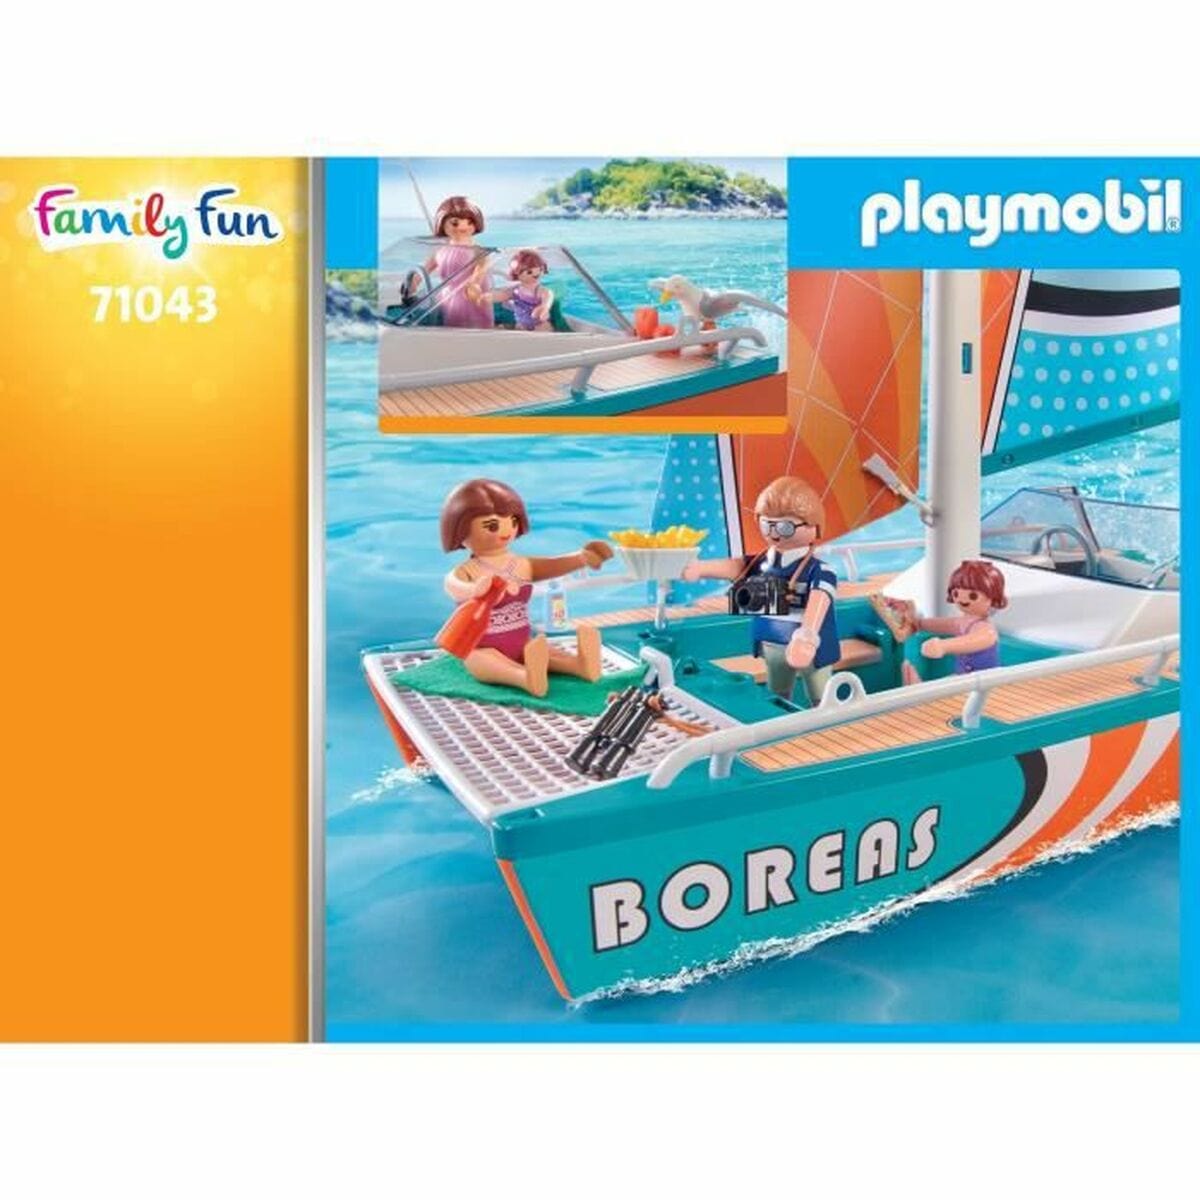 Playmobil Spielzeug | Kostüme > Spielzeug und Spiele > Action-Figuren Playset Playmobil Family Fun